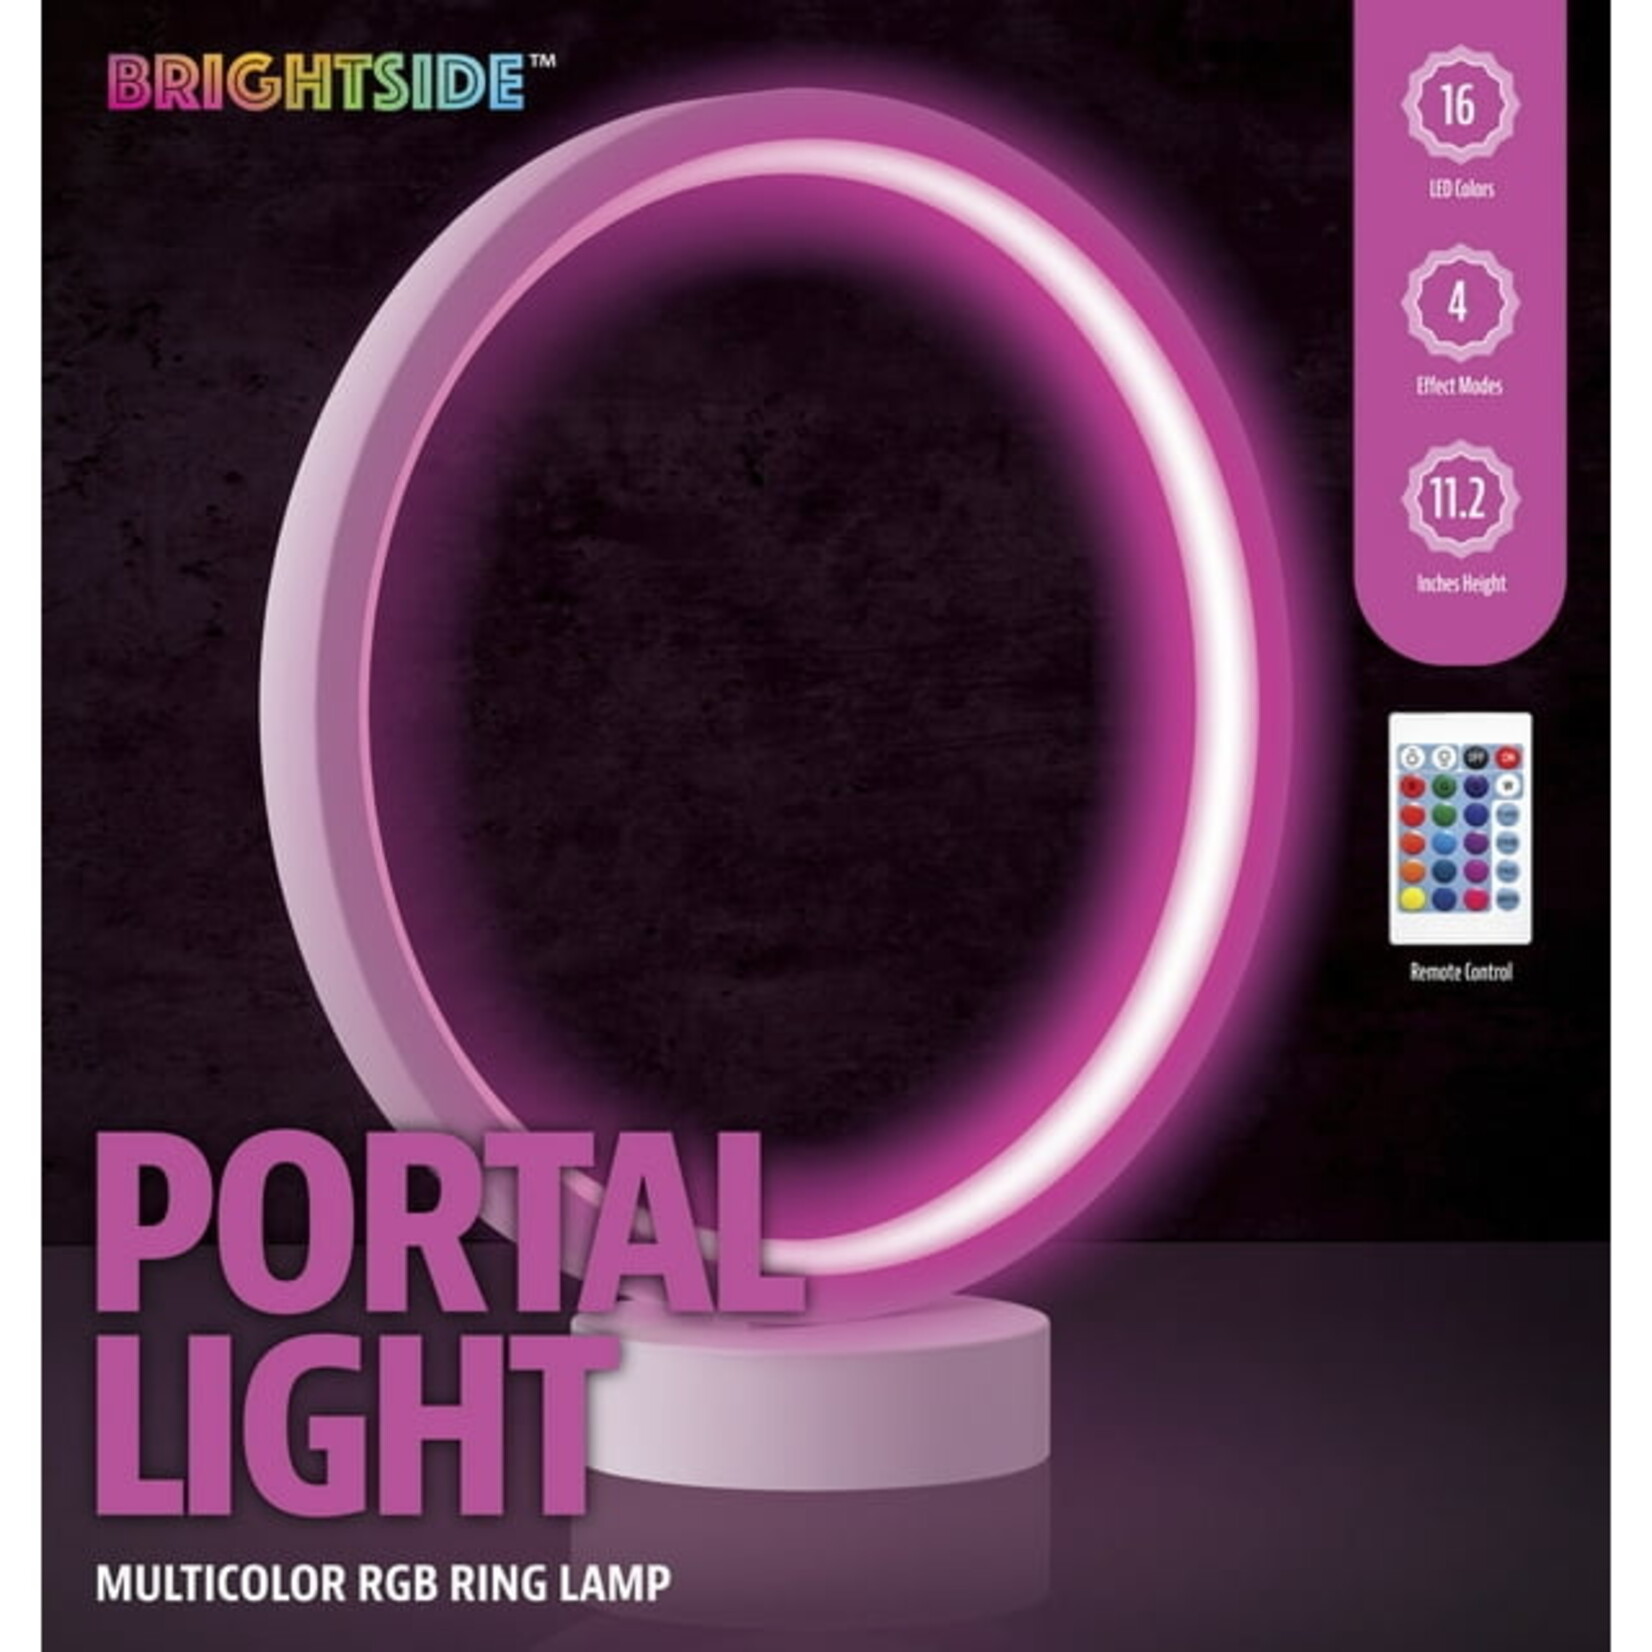 Brightside LED Portal Light Ring Lamp- Multicolor